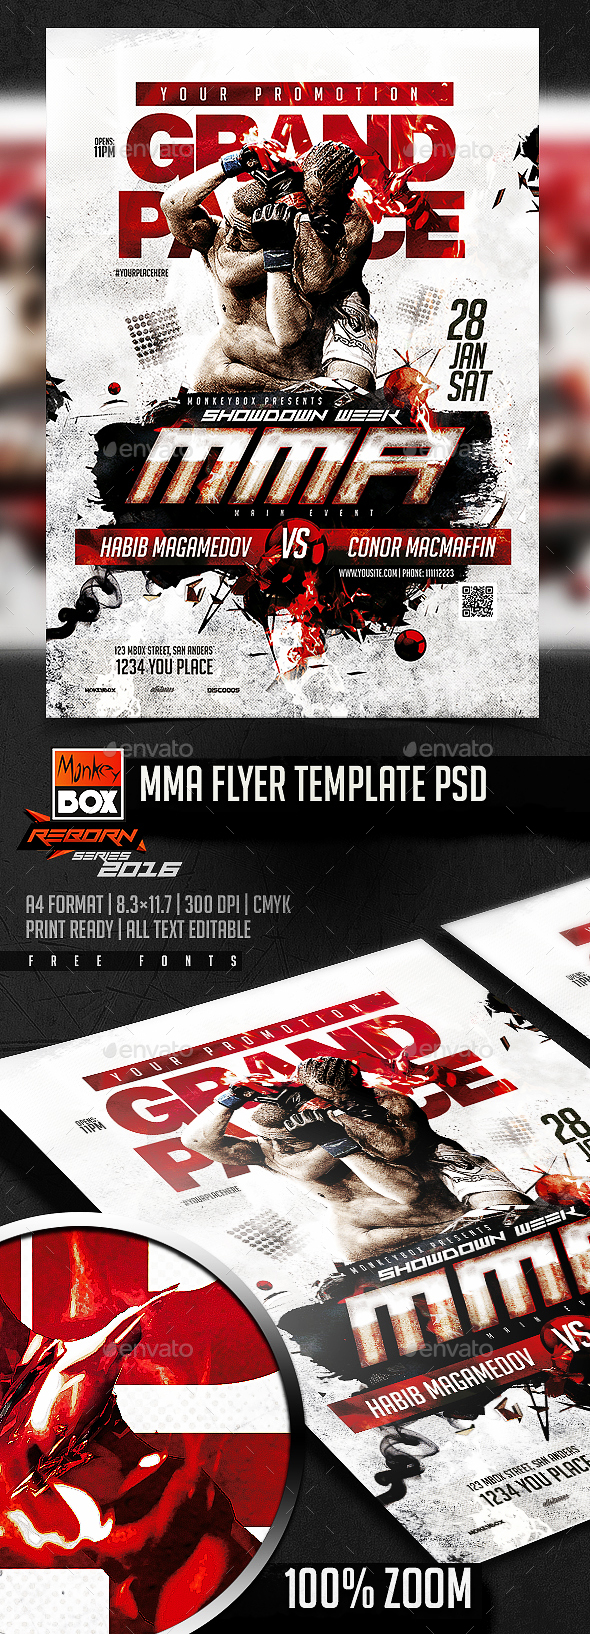 MMA Flyer Template PSD